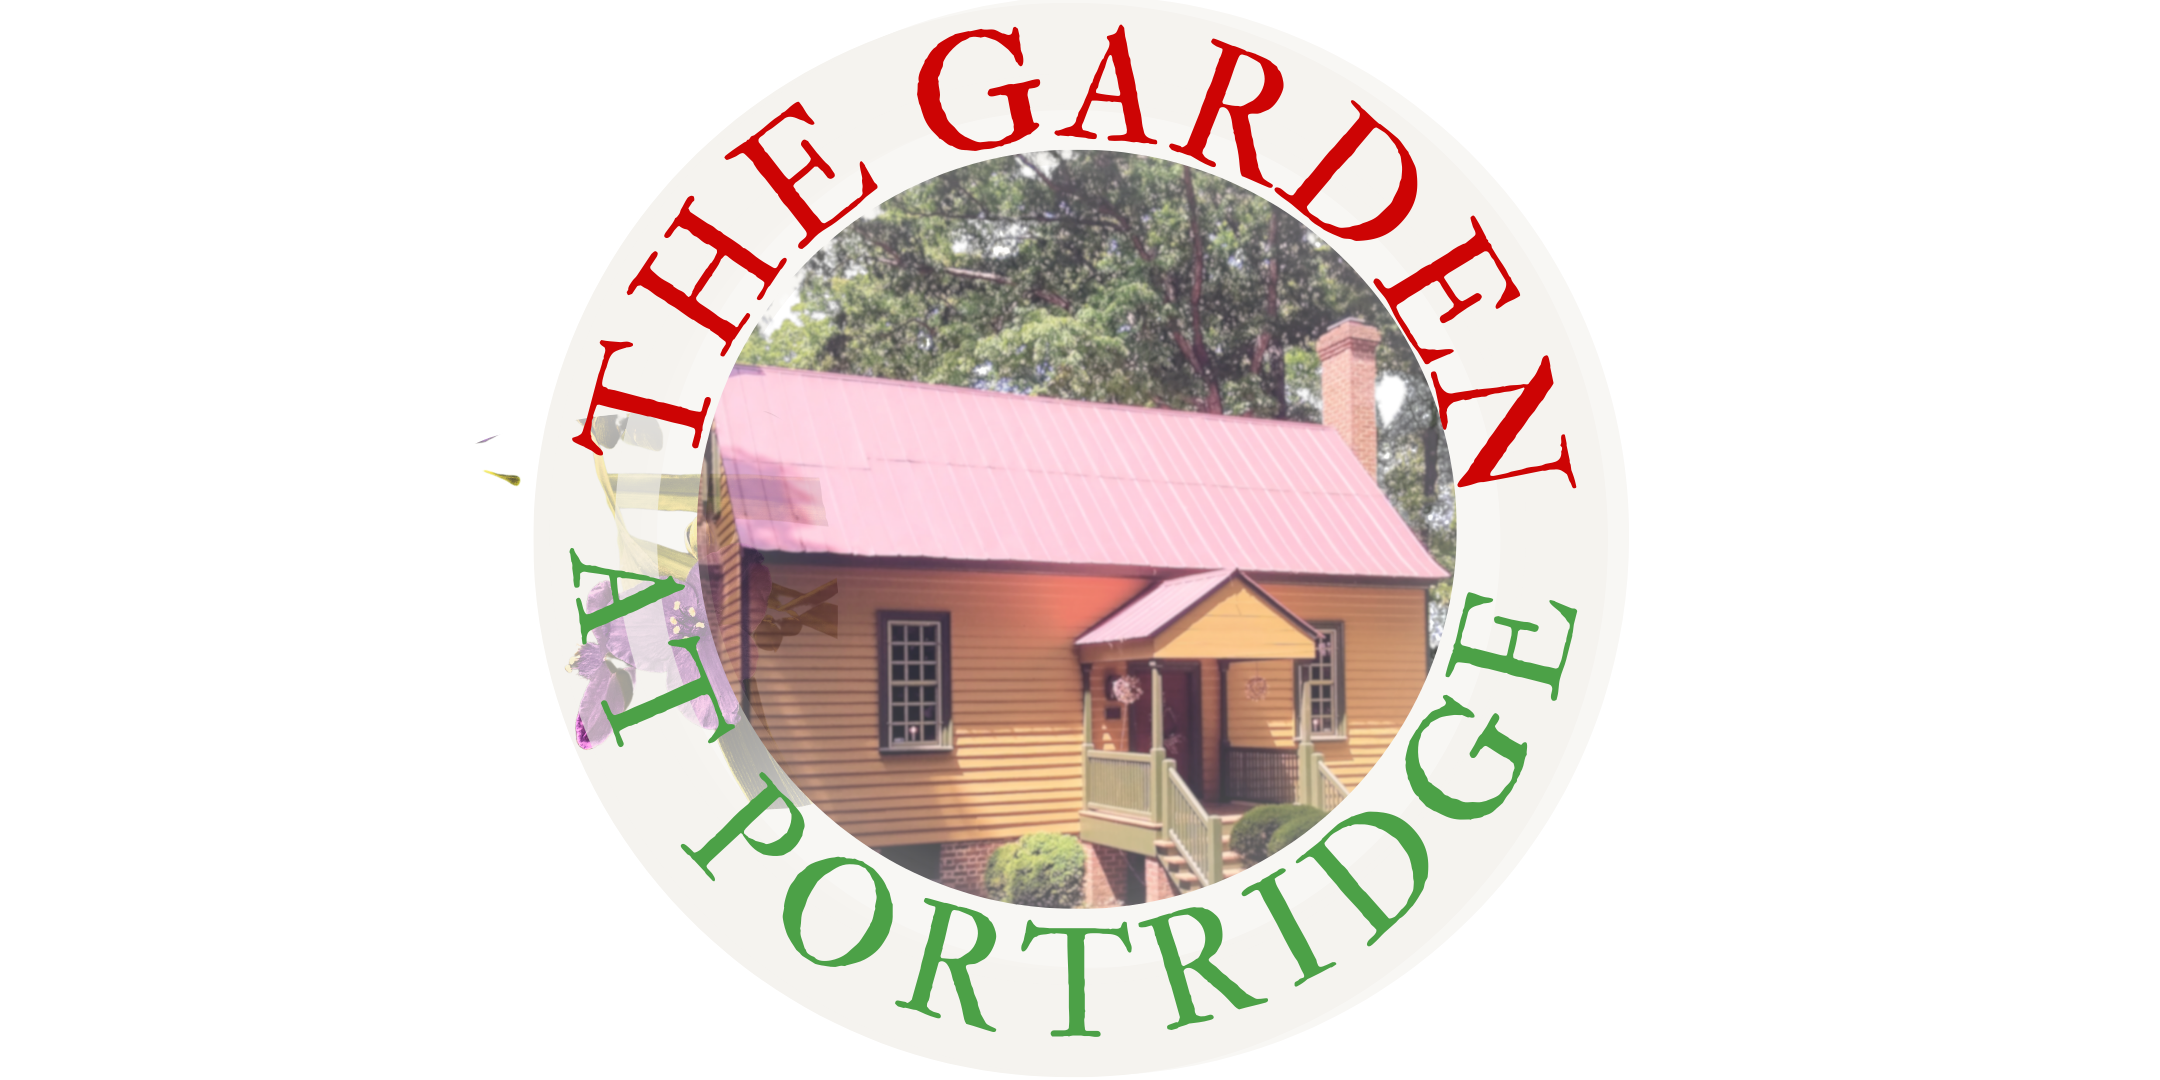 The Garden at Portridge